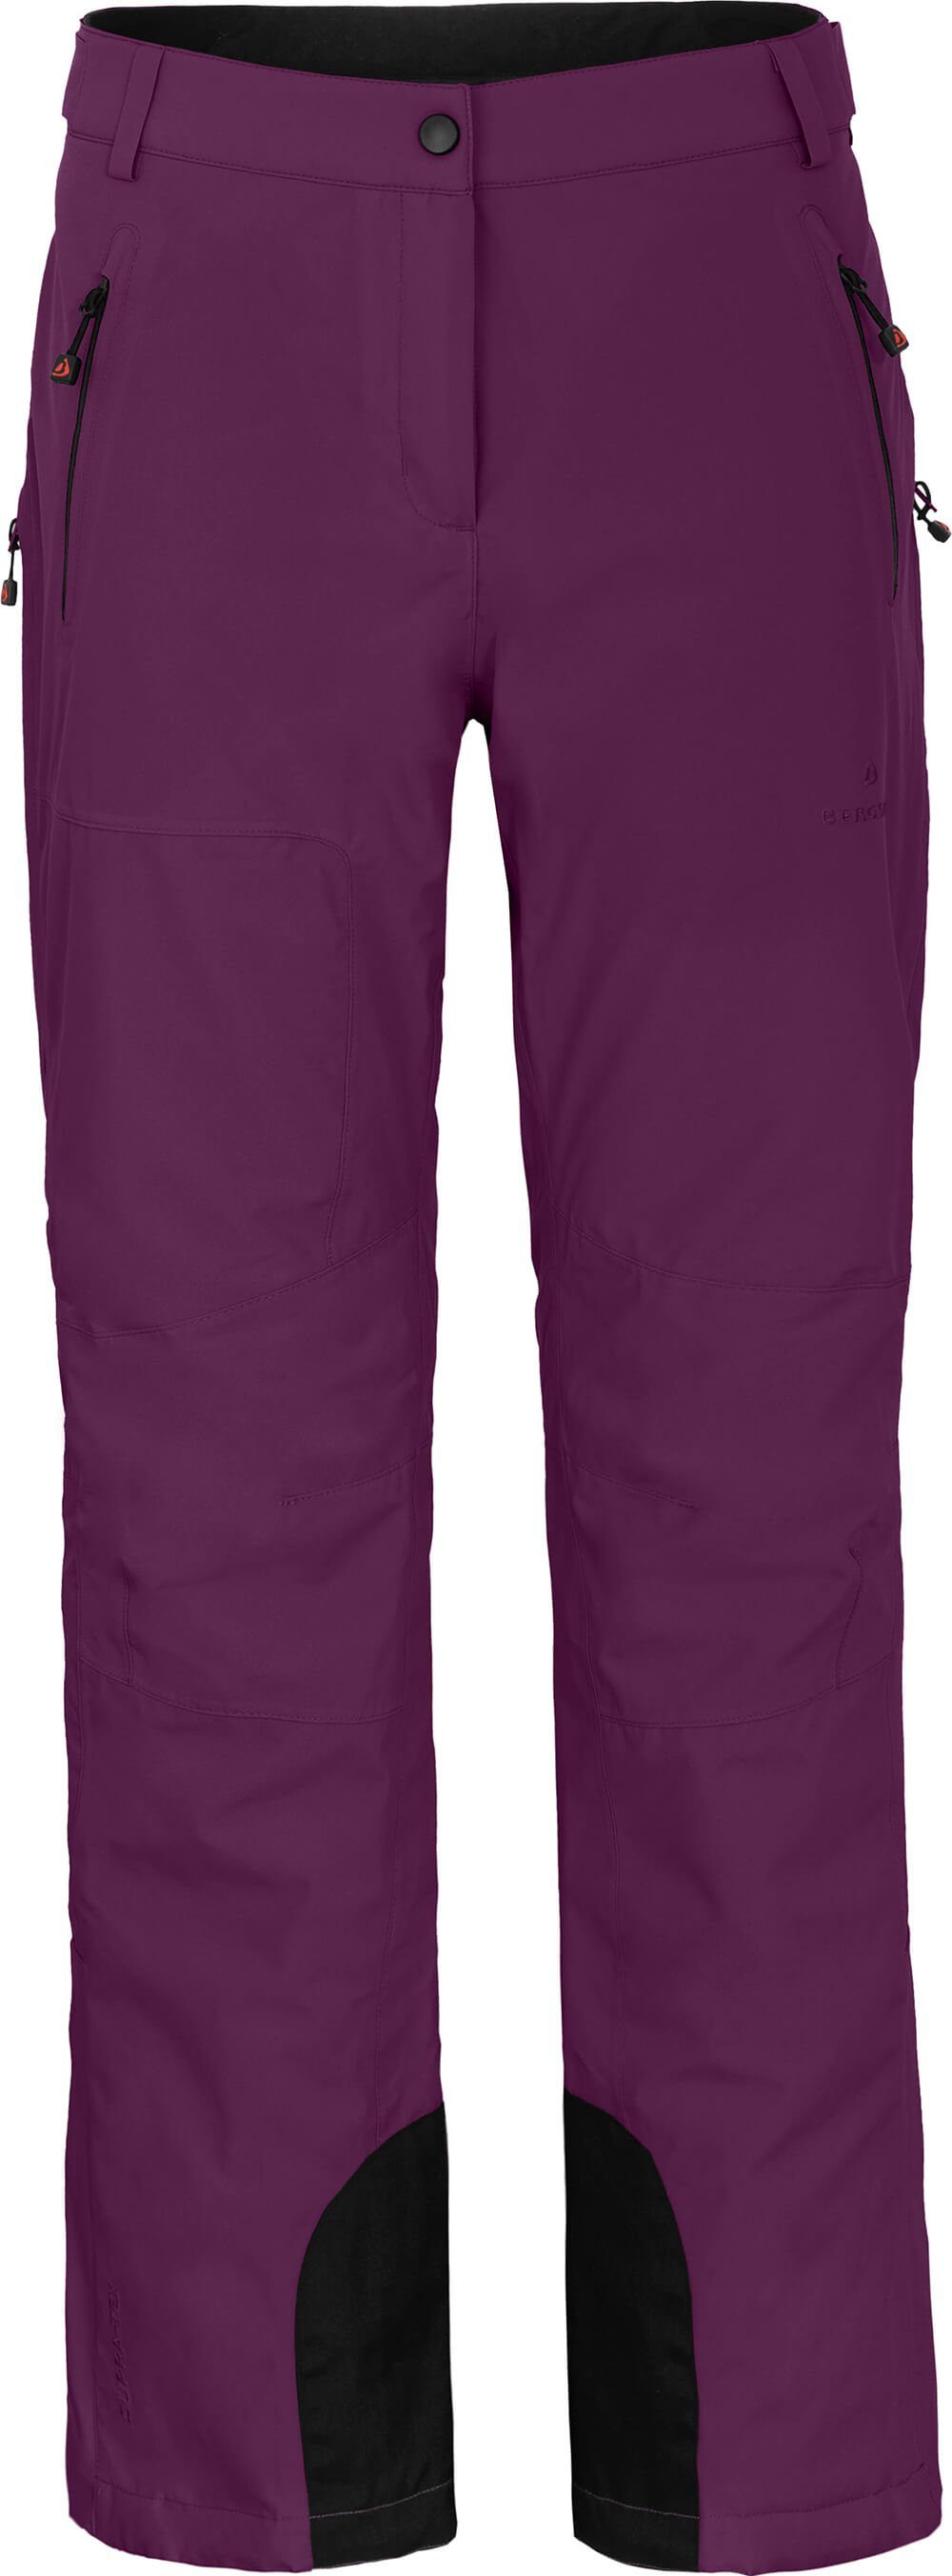 Bergson Skihose Skihose, violett Wassersäule, 20000 mm light unwattiert, Kurzgrößen, Damen dunkel ICE